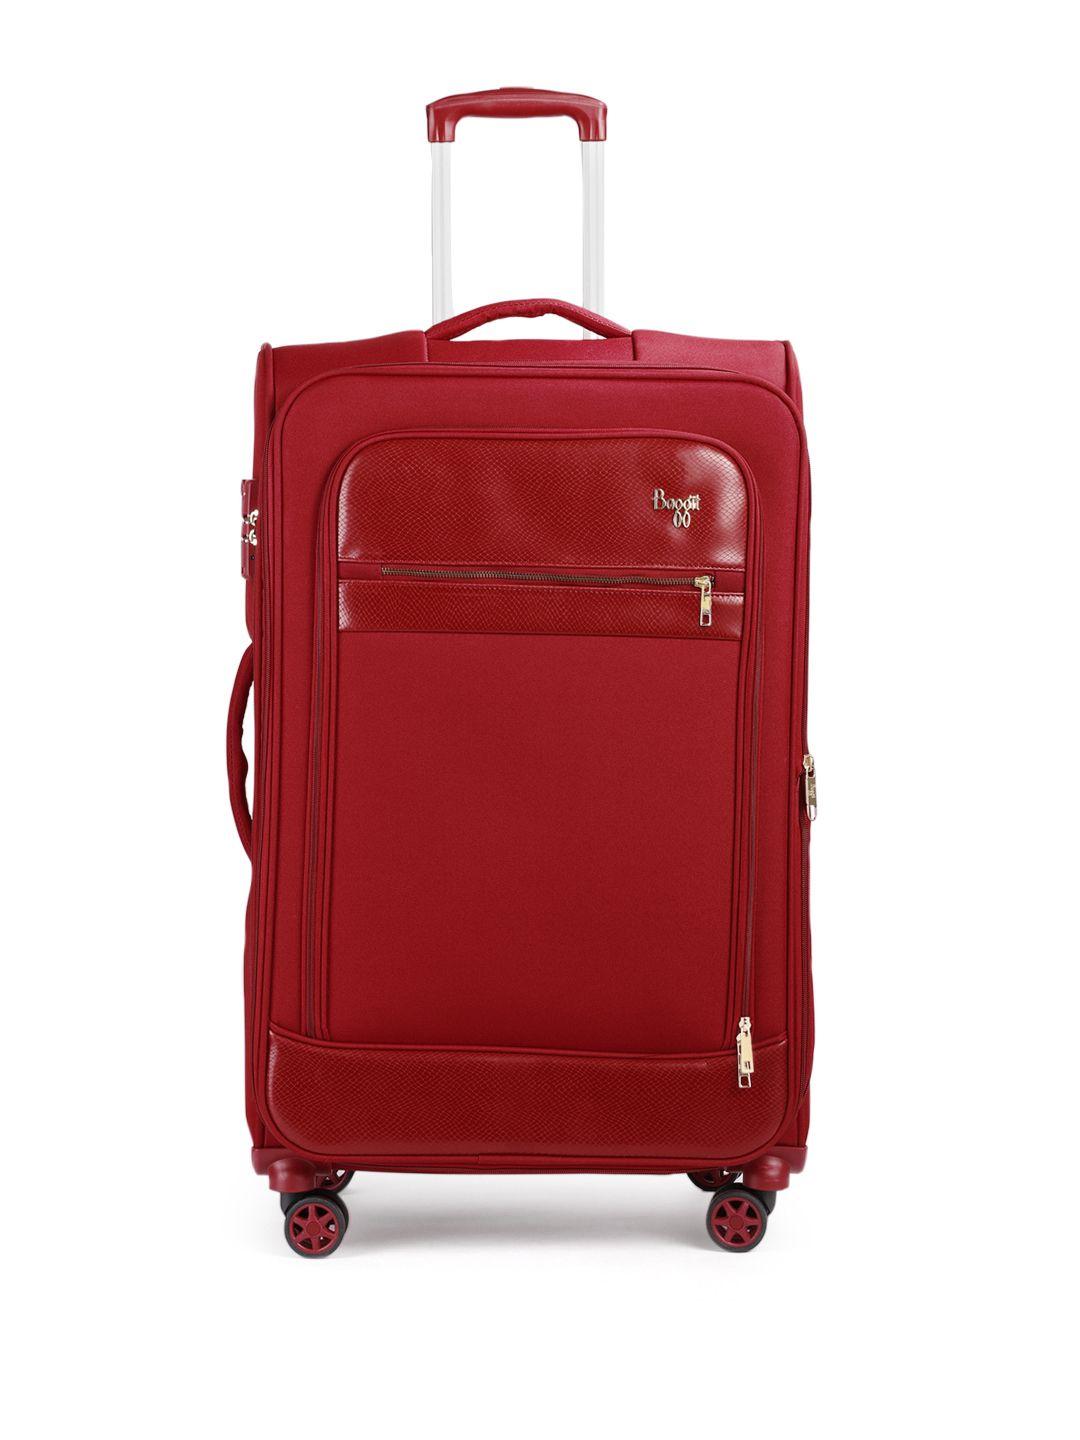 baggit aspire 77 cm large trolley suitcase